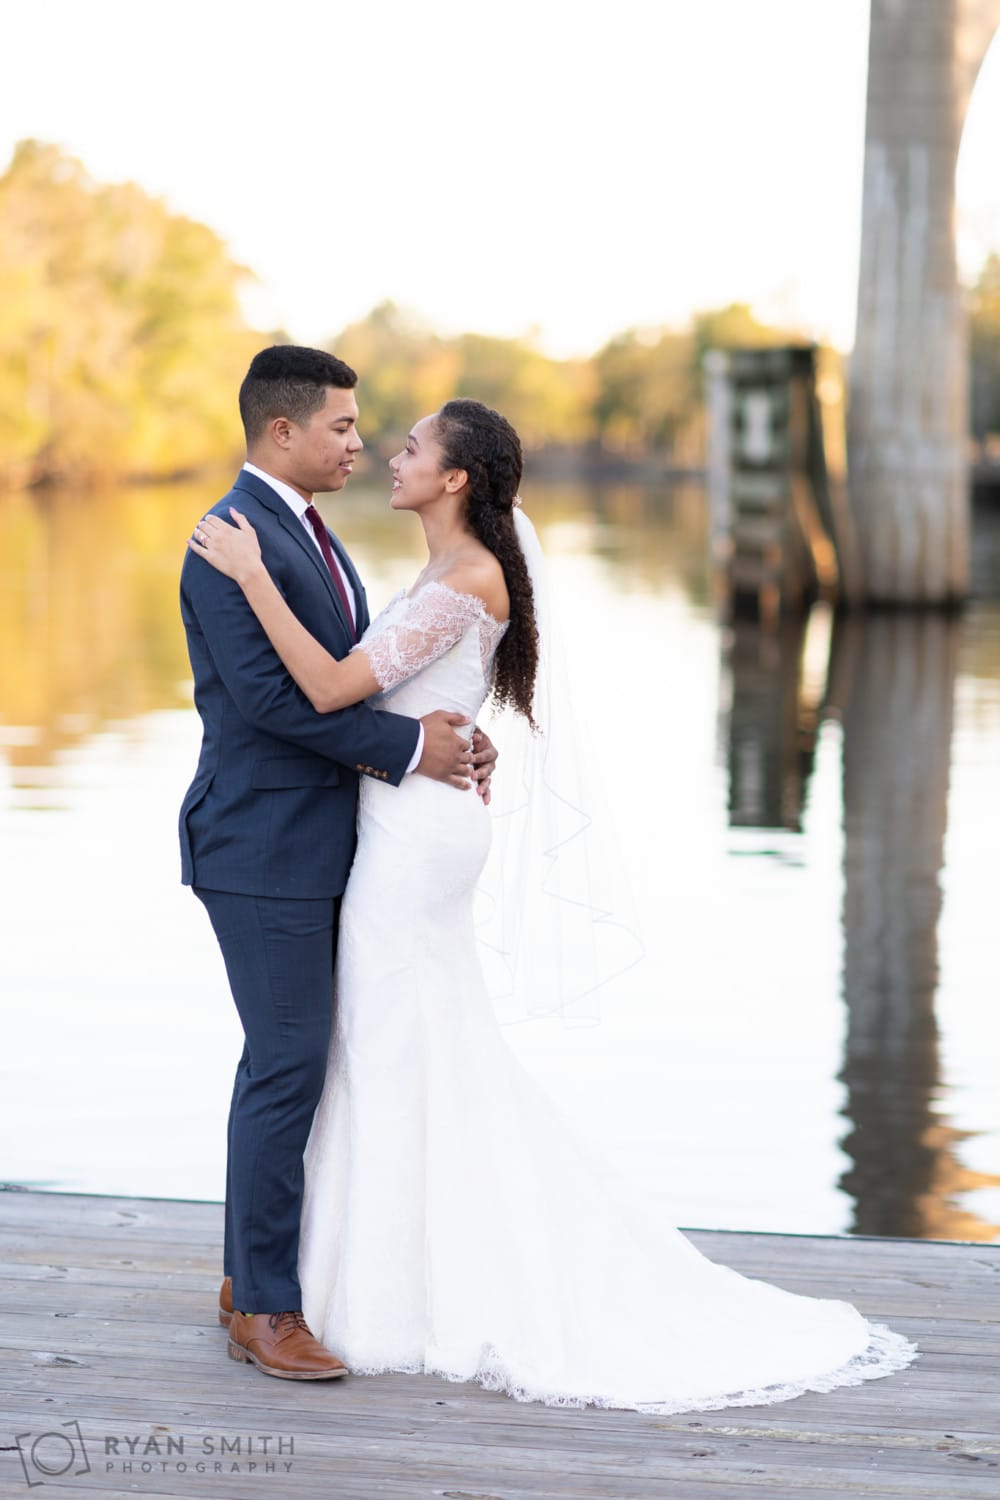 Romantic poses near the water on the riverwalk docks - Conway Riverwalk